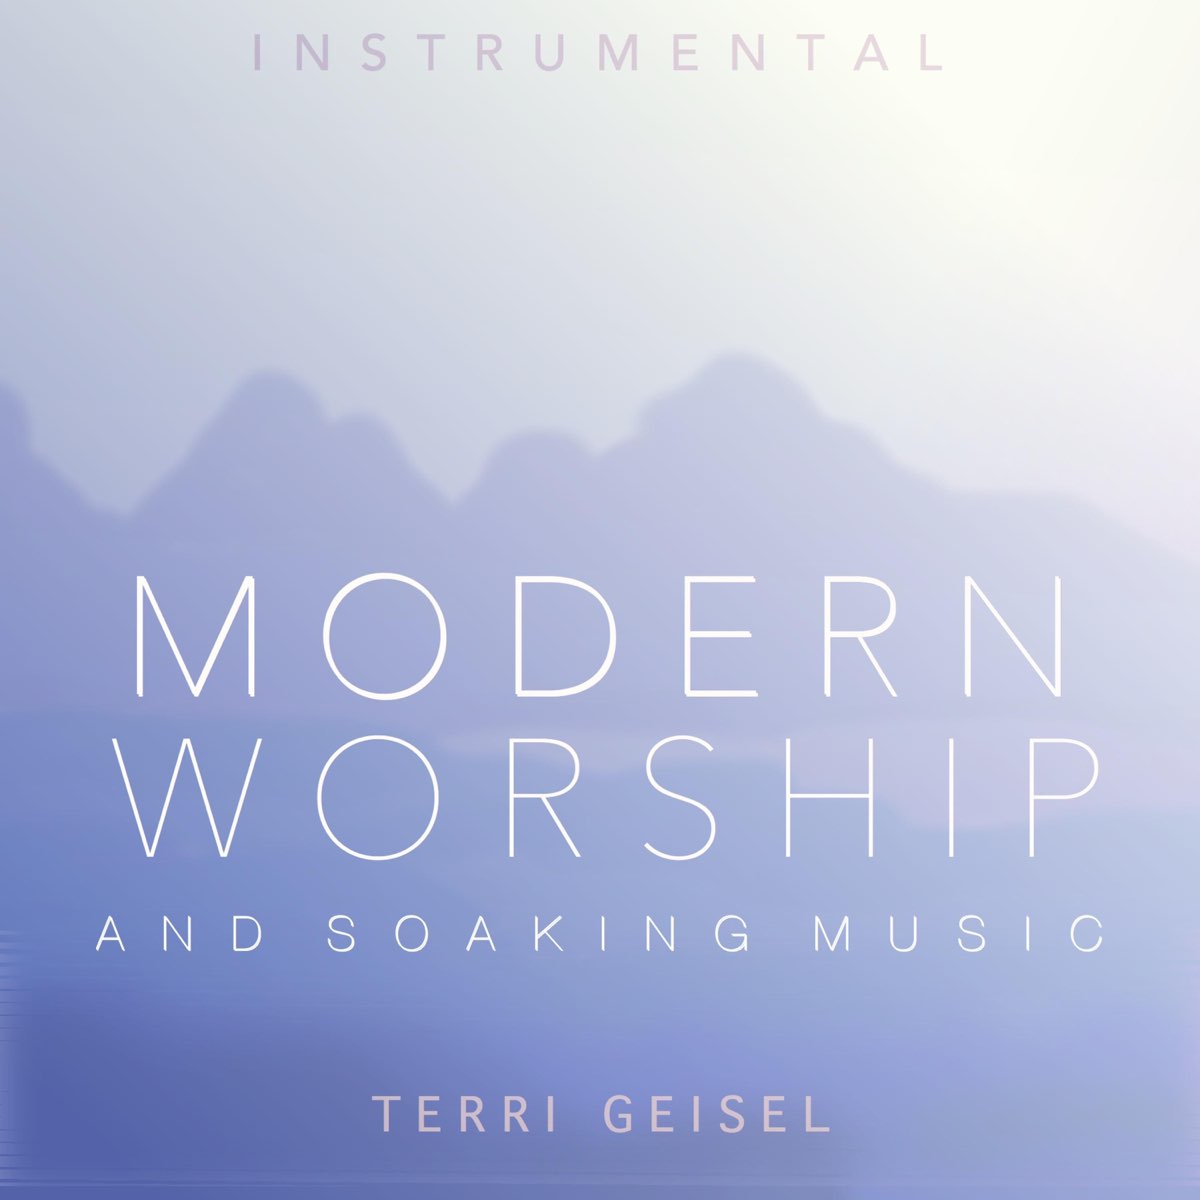 Instrumental Modern Worship and Soaking Music - Album by Terri Geisel -  Apple Music